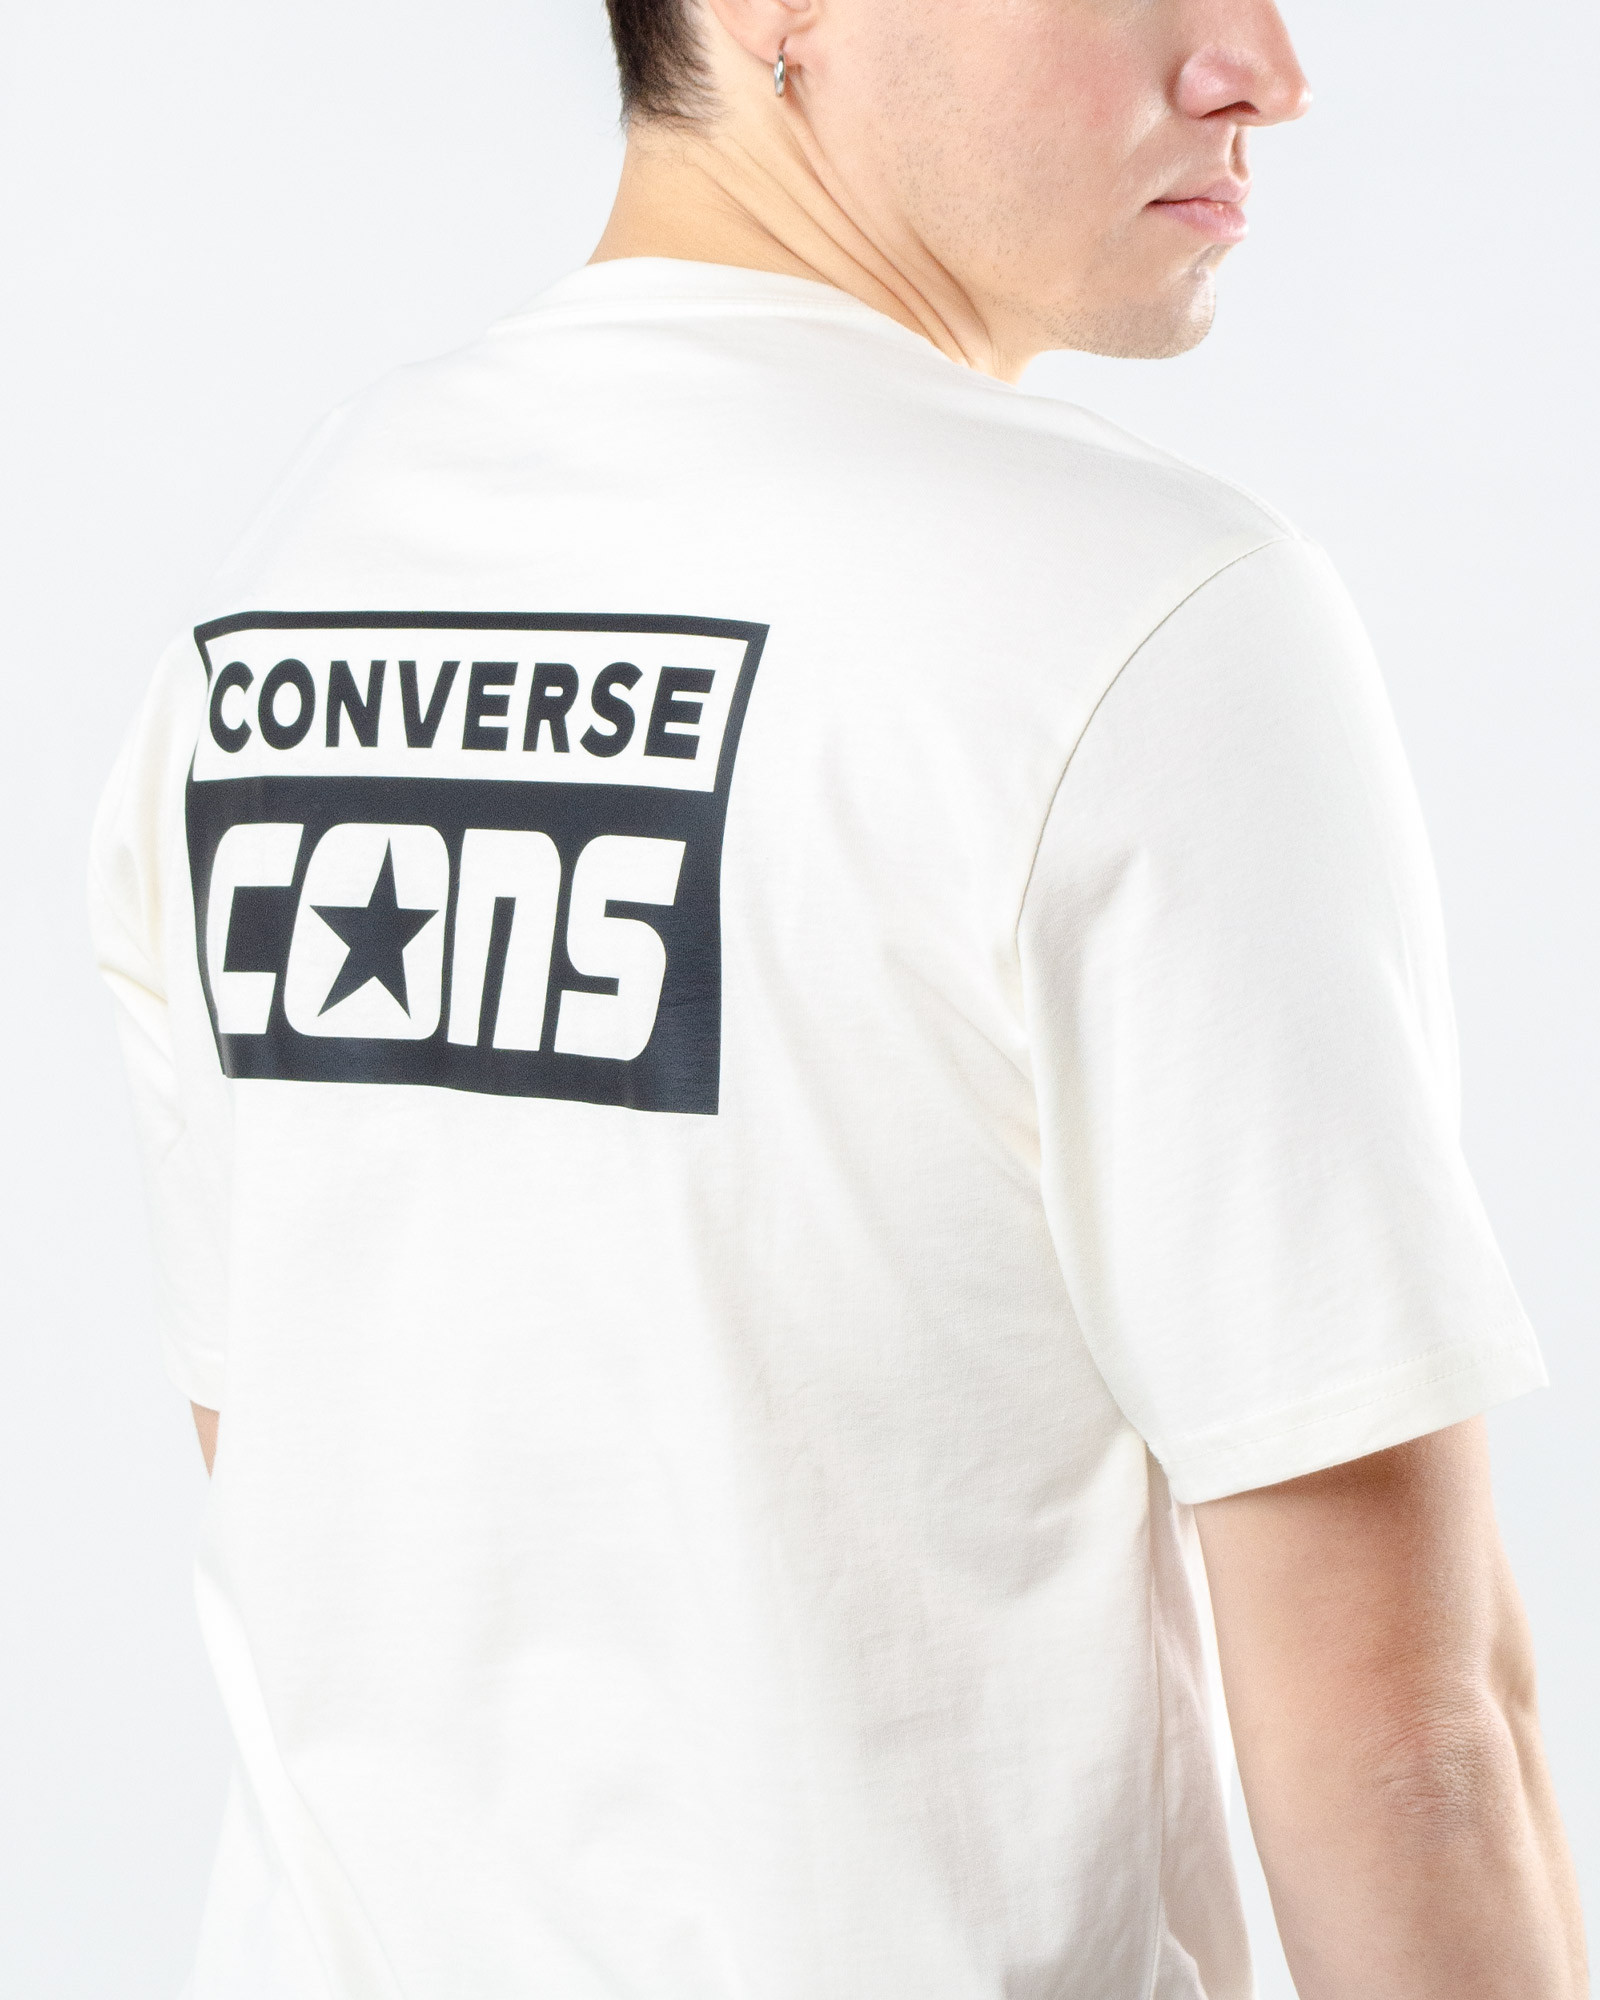 Футболка Converse Cons Short Sleeve Tee 10021134-281